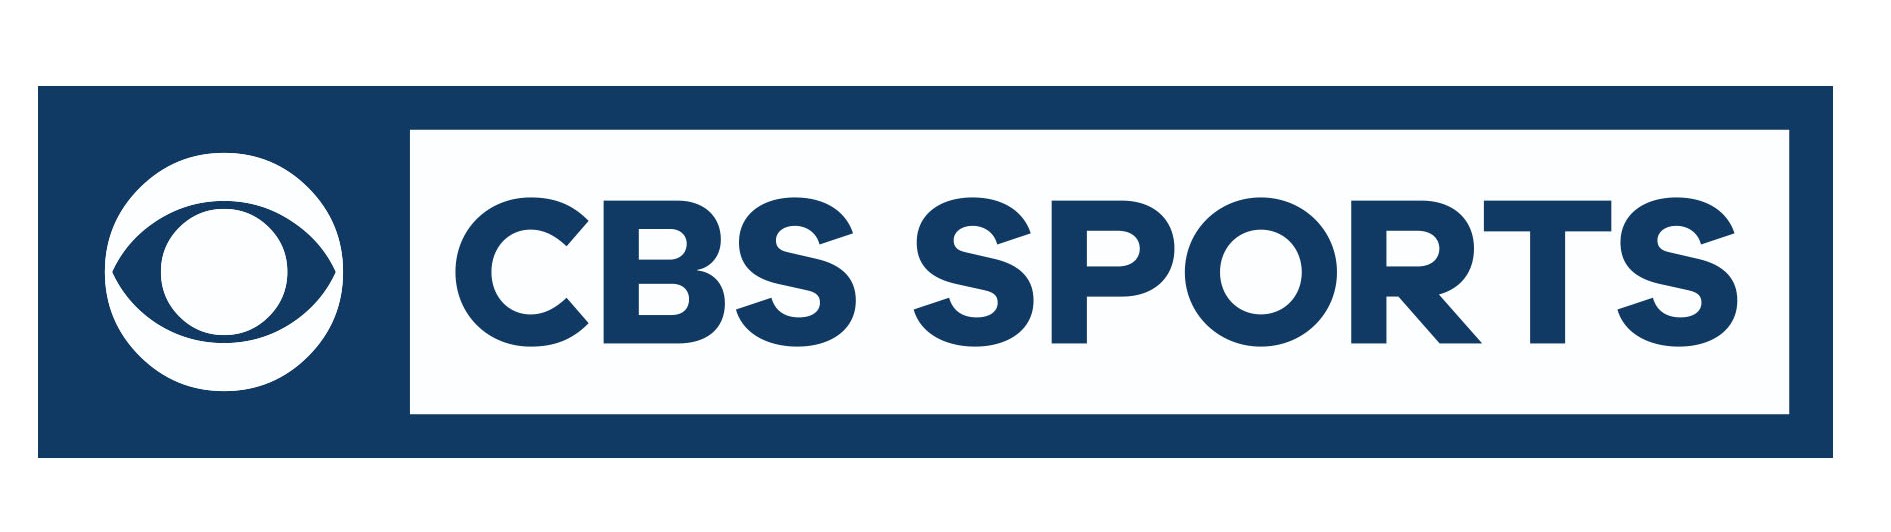 cbssports_logo